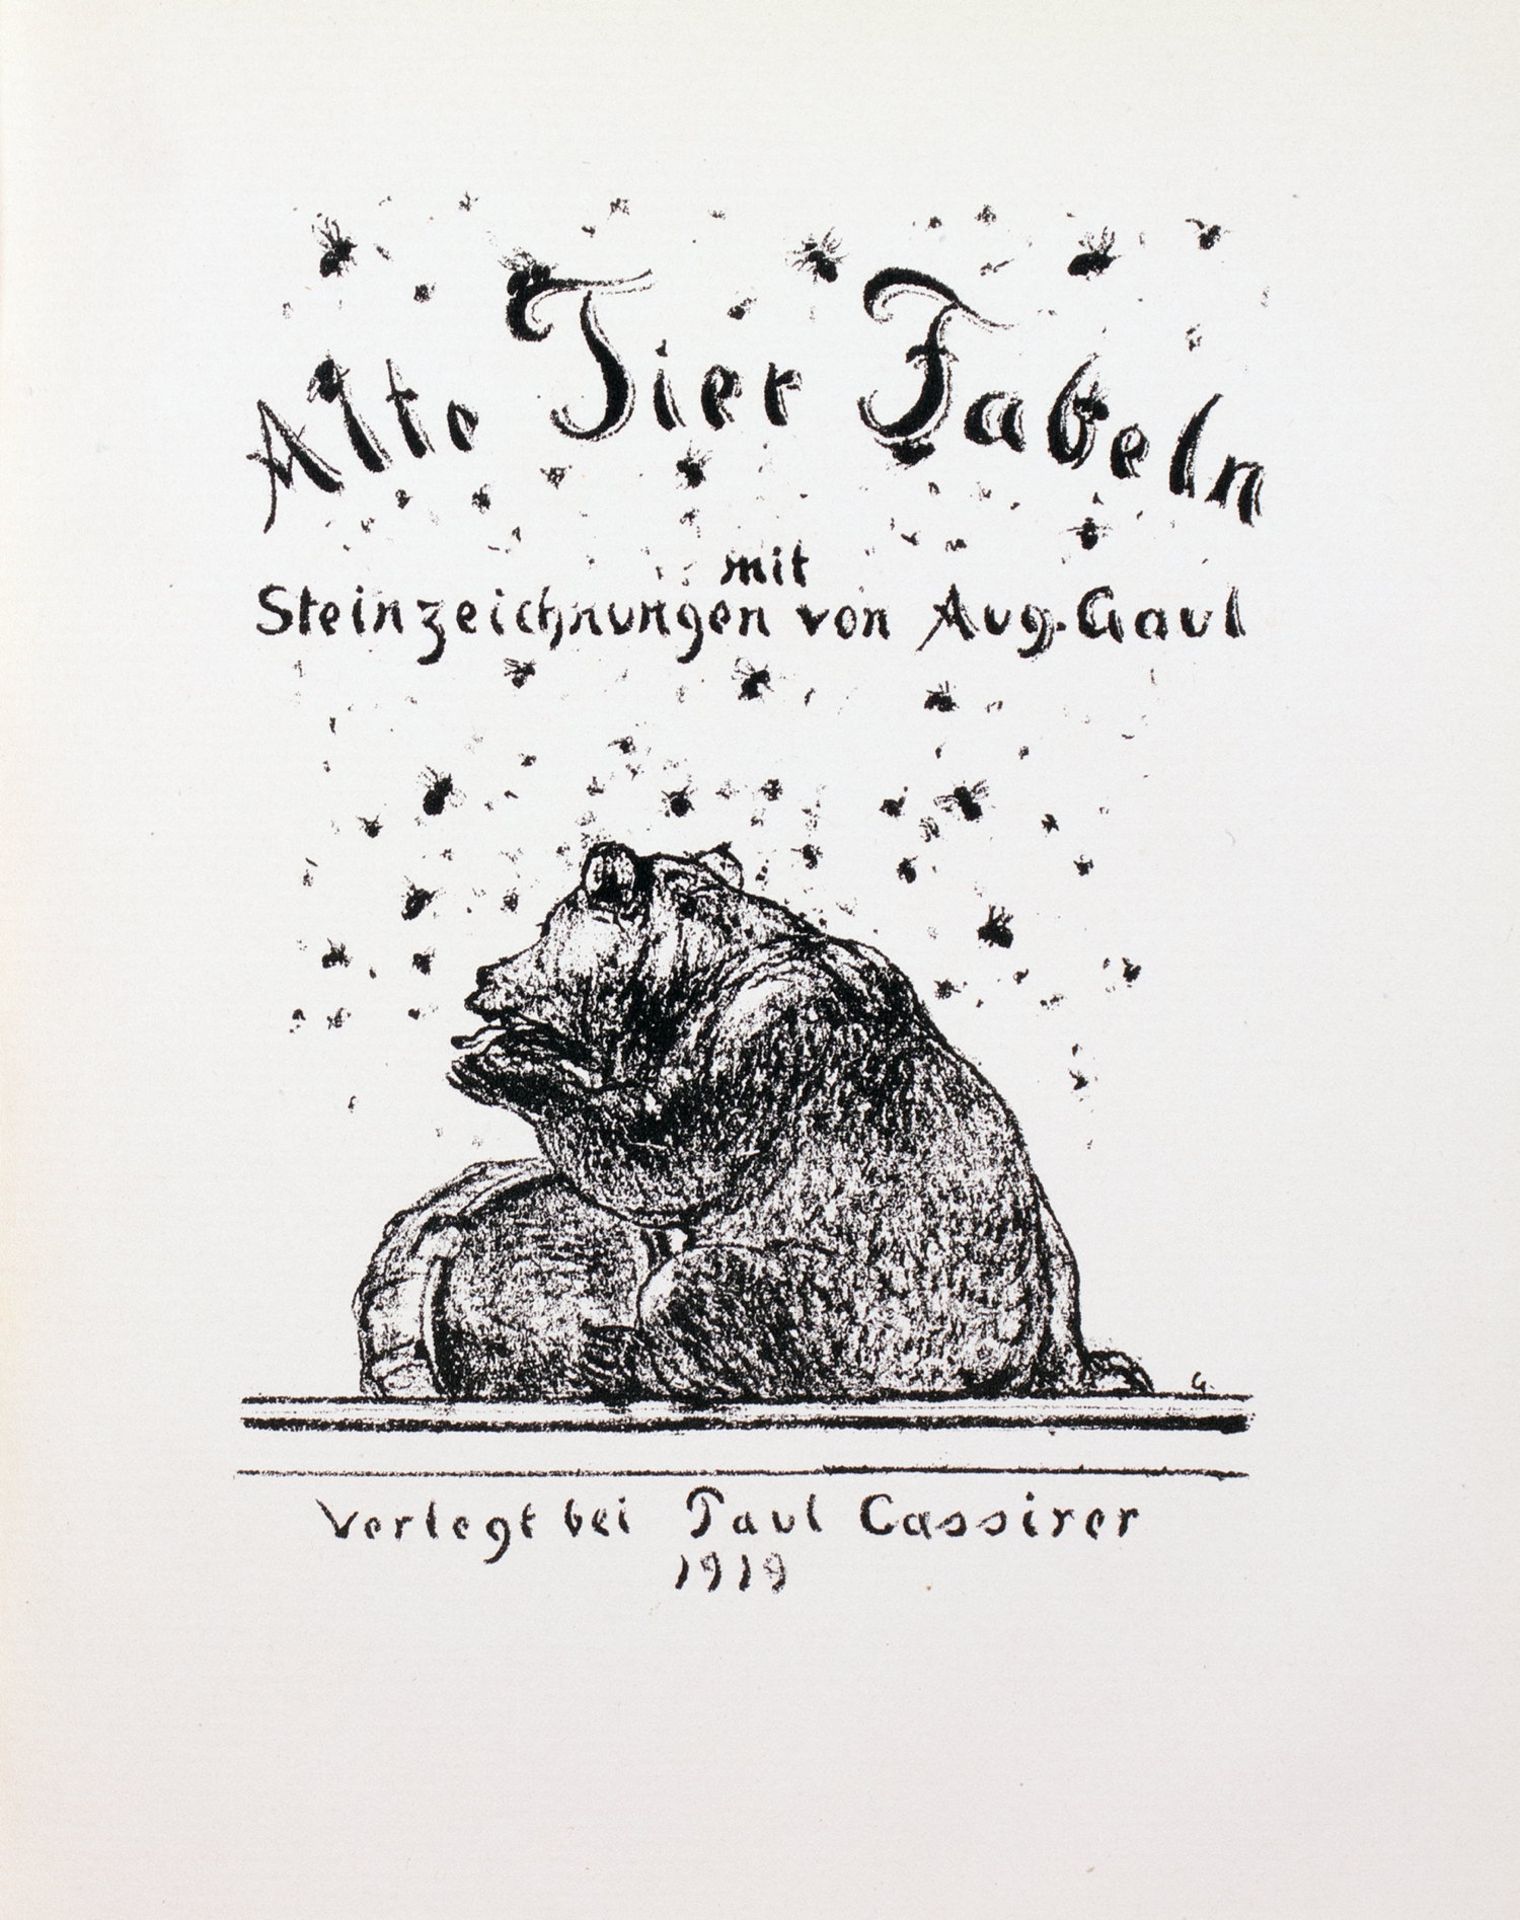 August Gaul - Alte Tier Fabeln